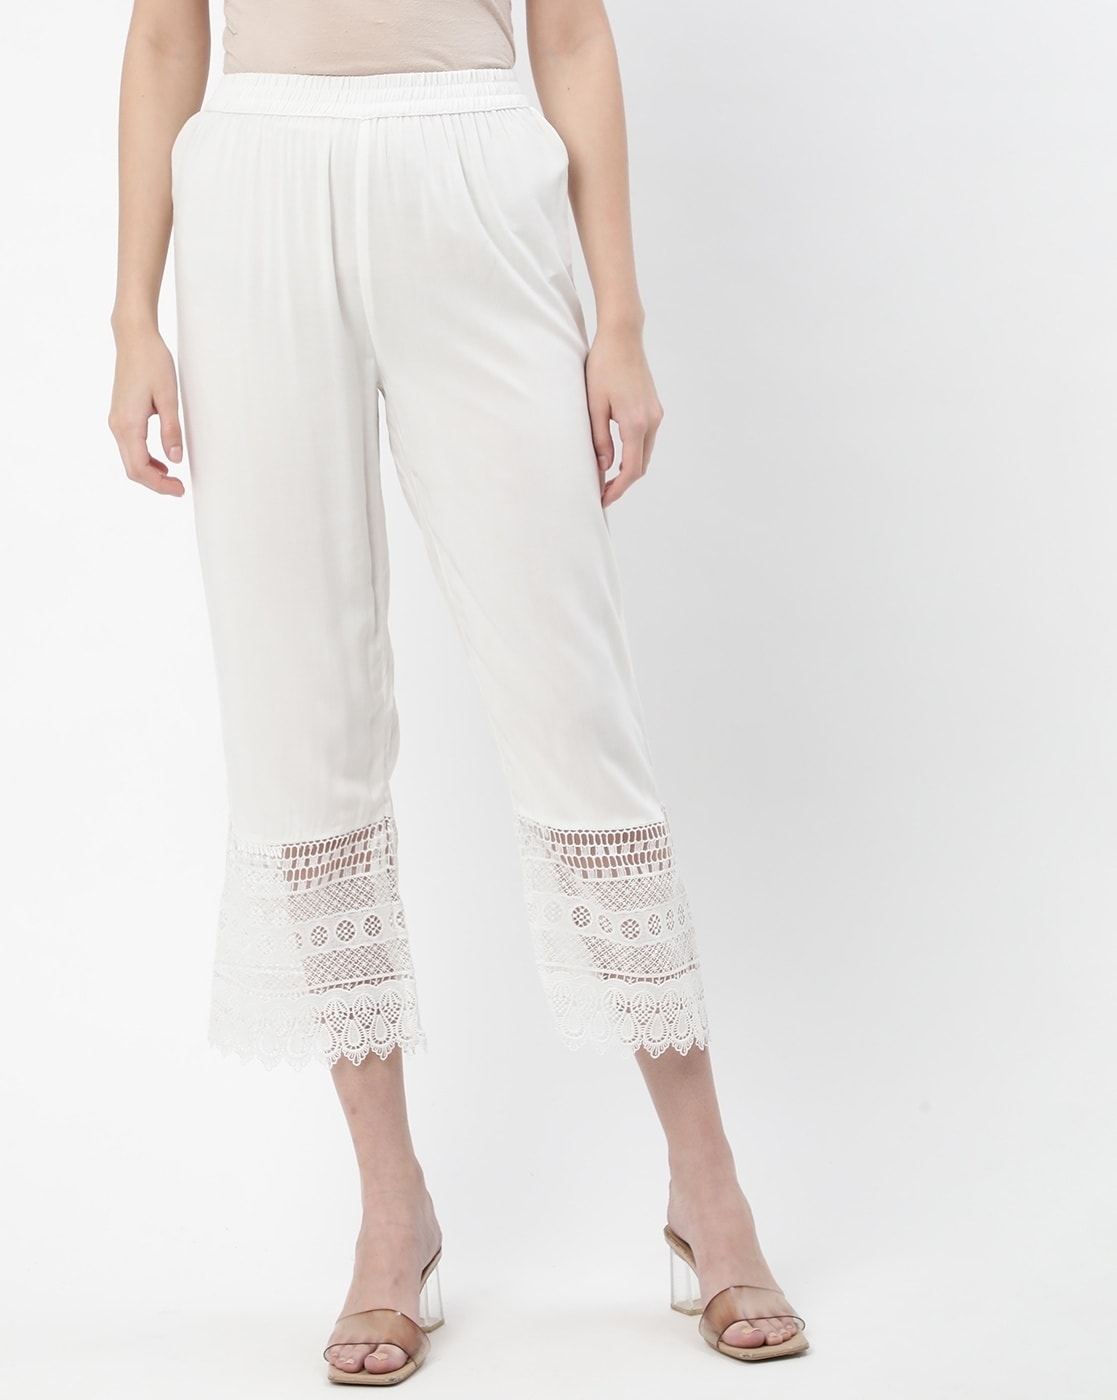 Srishti by FBB Cotton Casual Pants - Buy Srishti by FBB Cotton Casual Pants  Online at Best Prices in India on Snapdeal